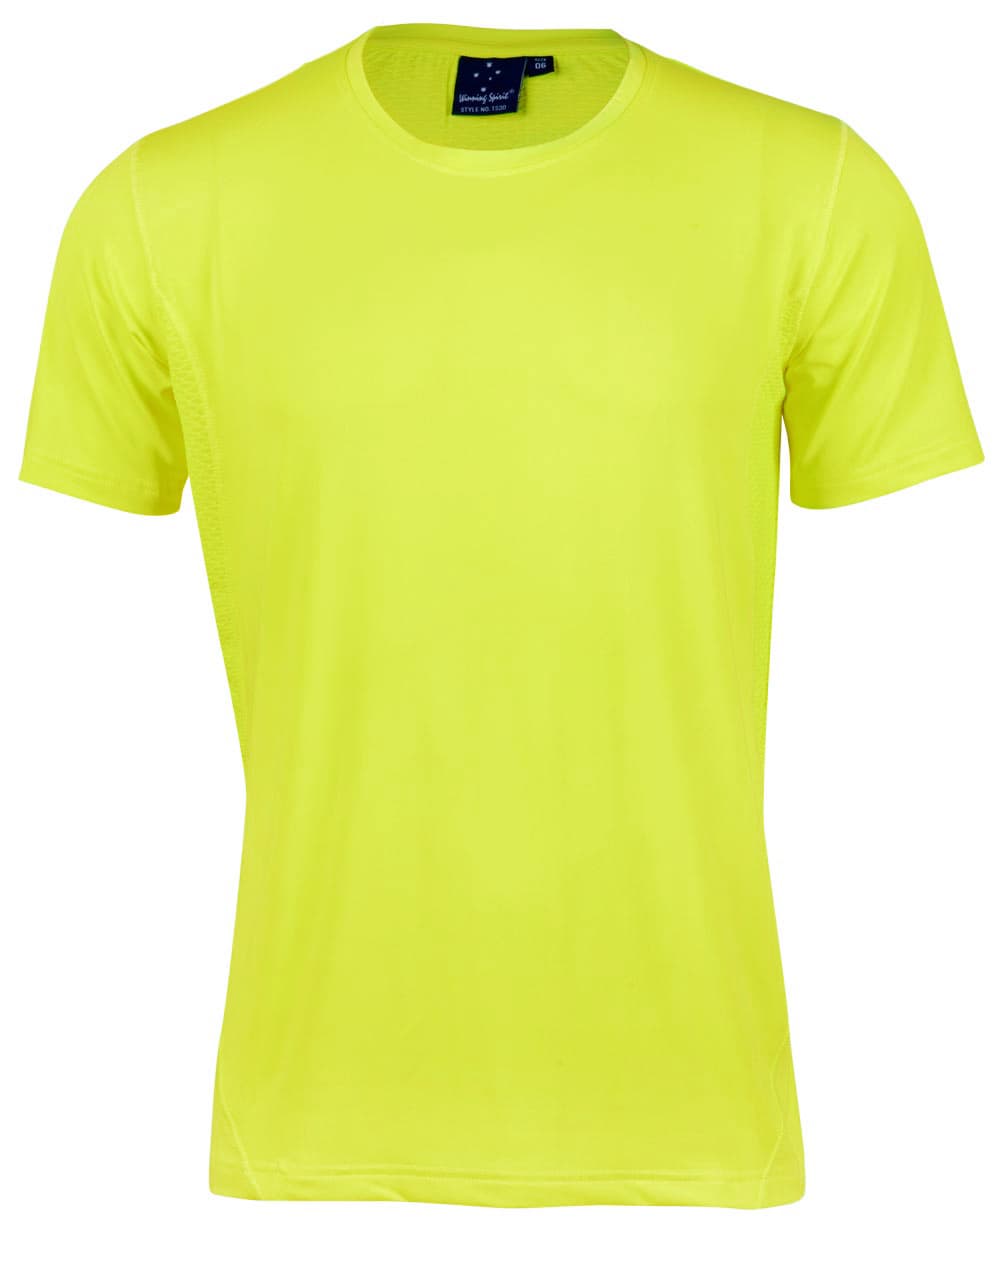 Mens CoolDry Stretch Tee Shirt TS29 | Fluoro Yellow